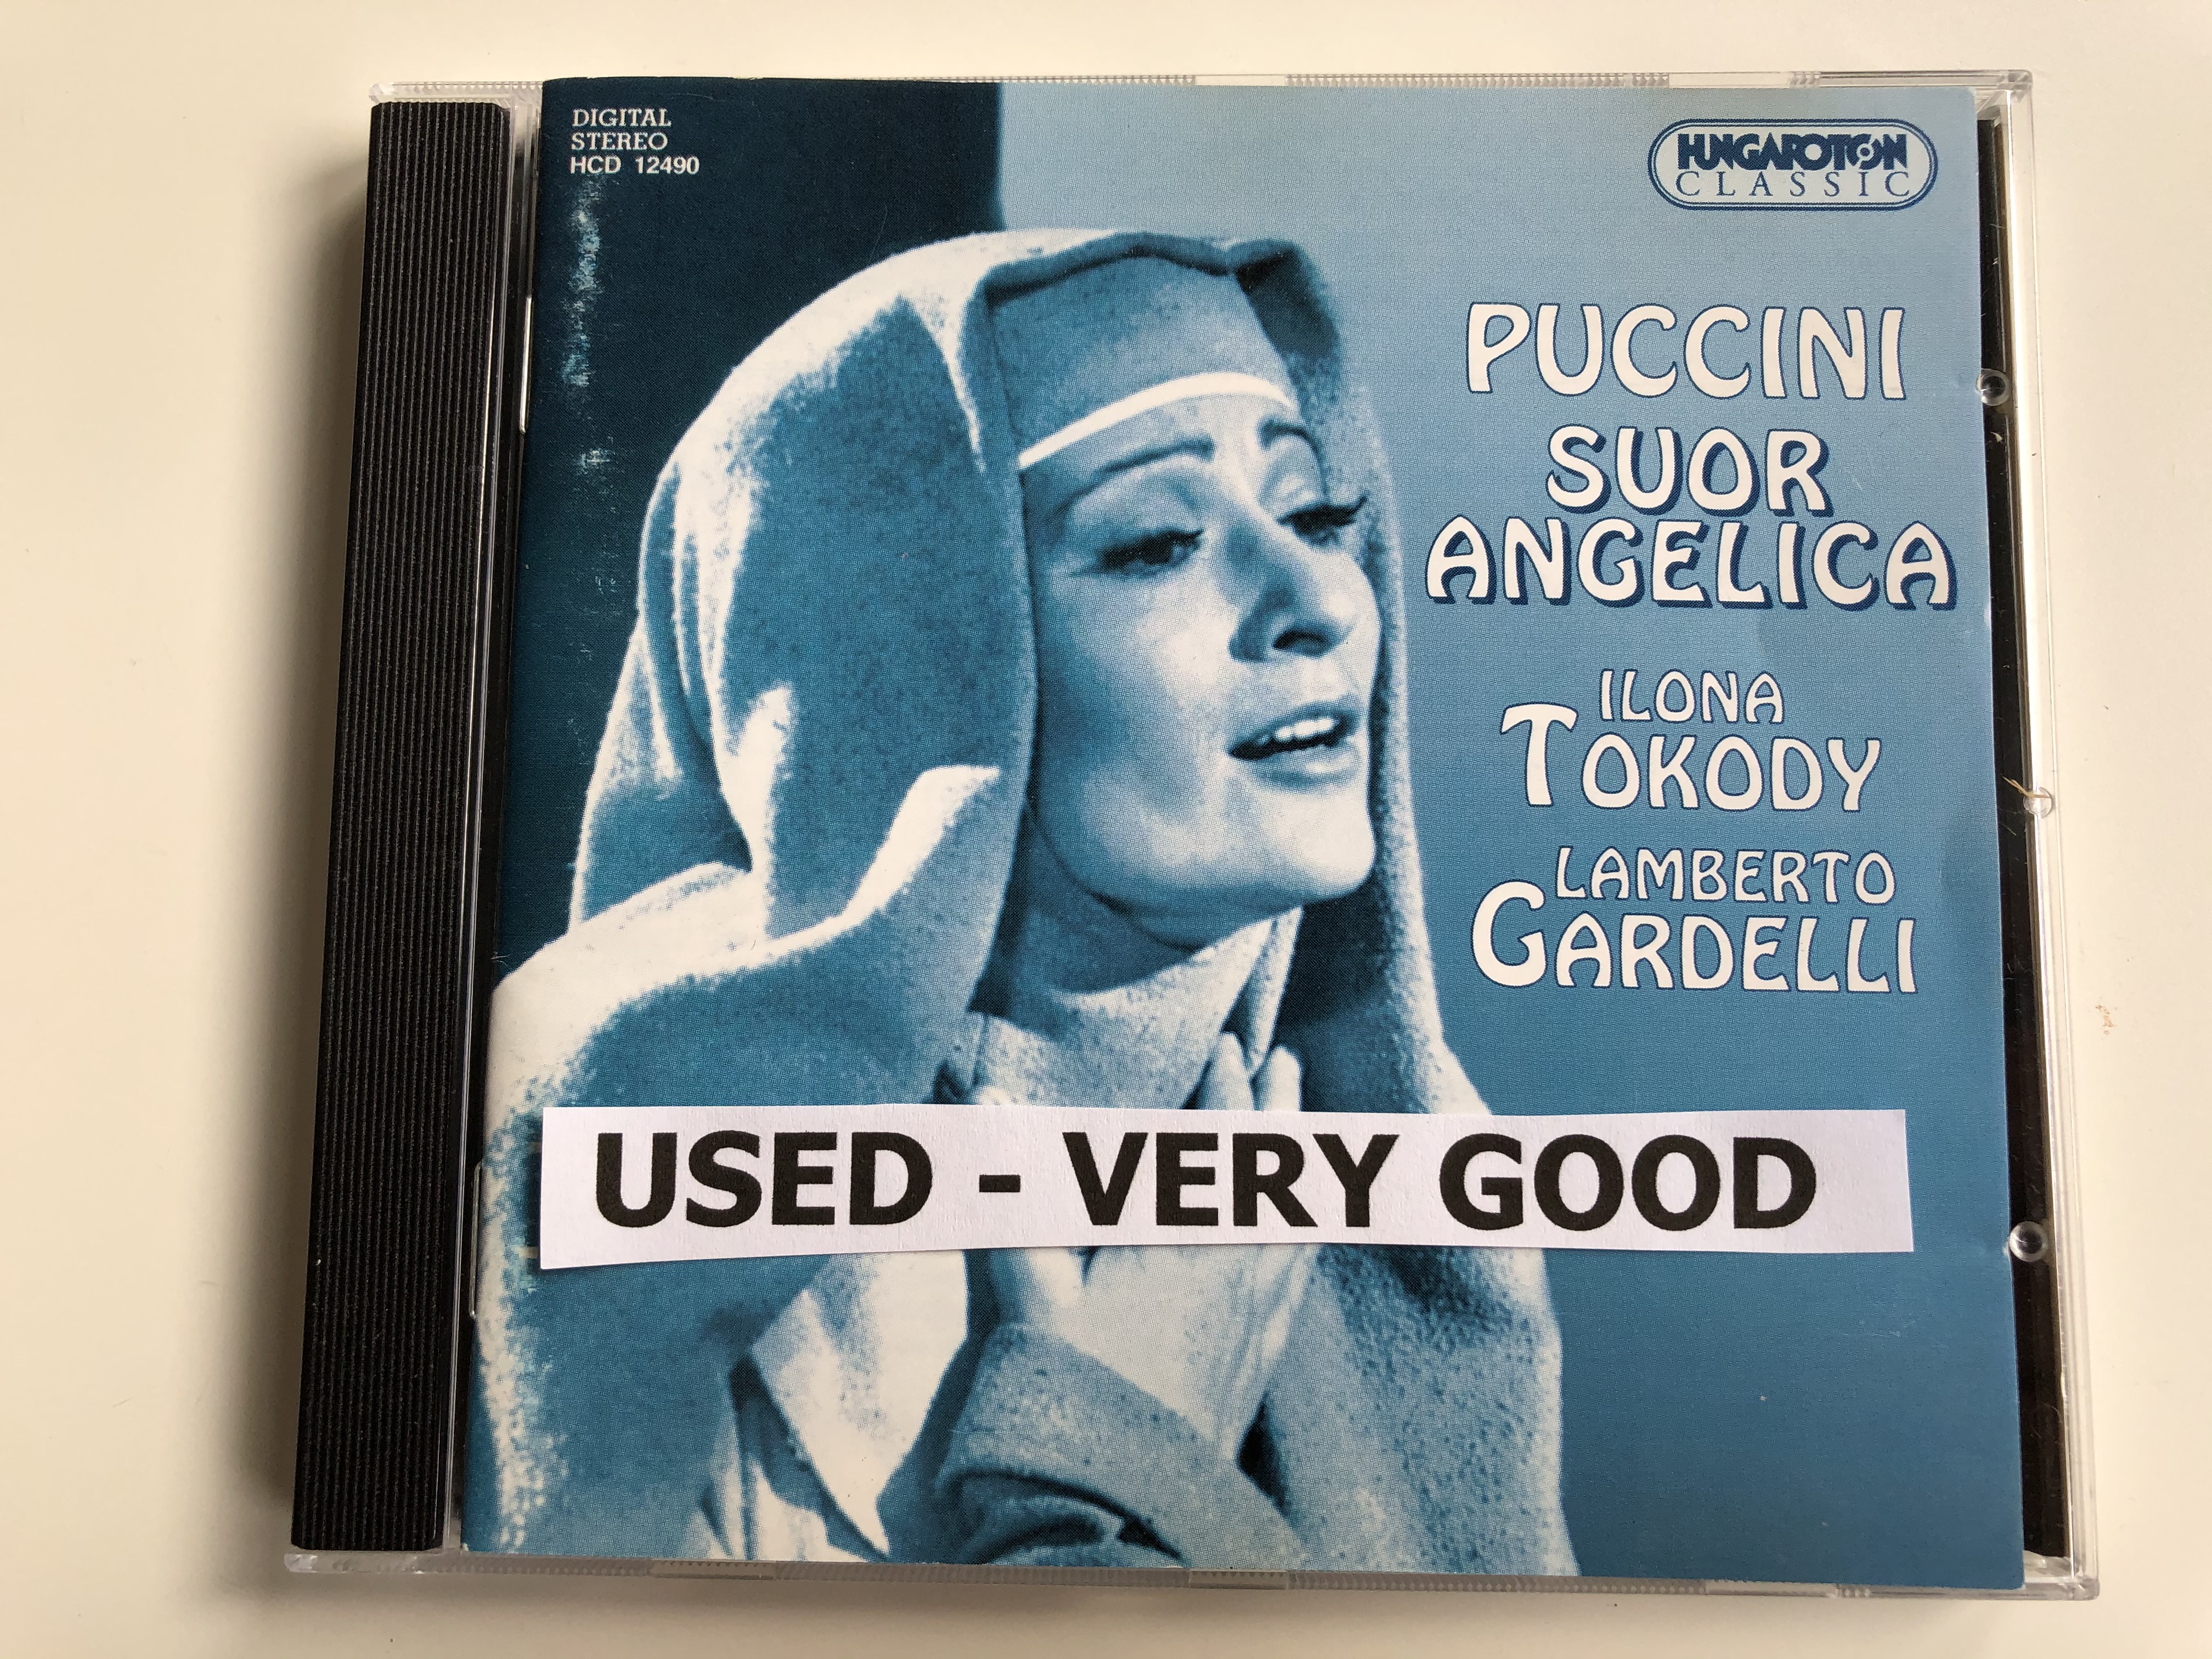 puccini-suor-angelica-ilona-tokody-lamberto-gardelli-hungaroton-classic-audio-cd-1996-stereo-hcd-12490-2-2-.jpg